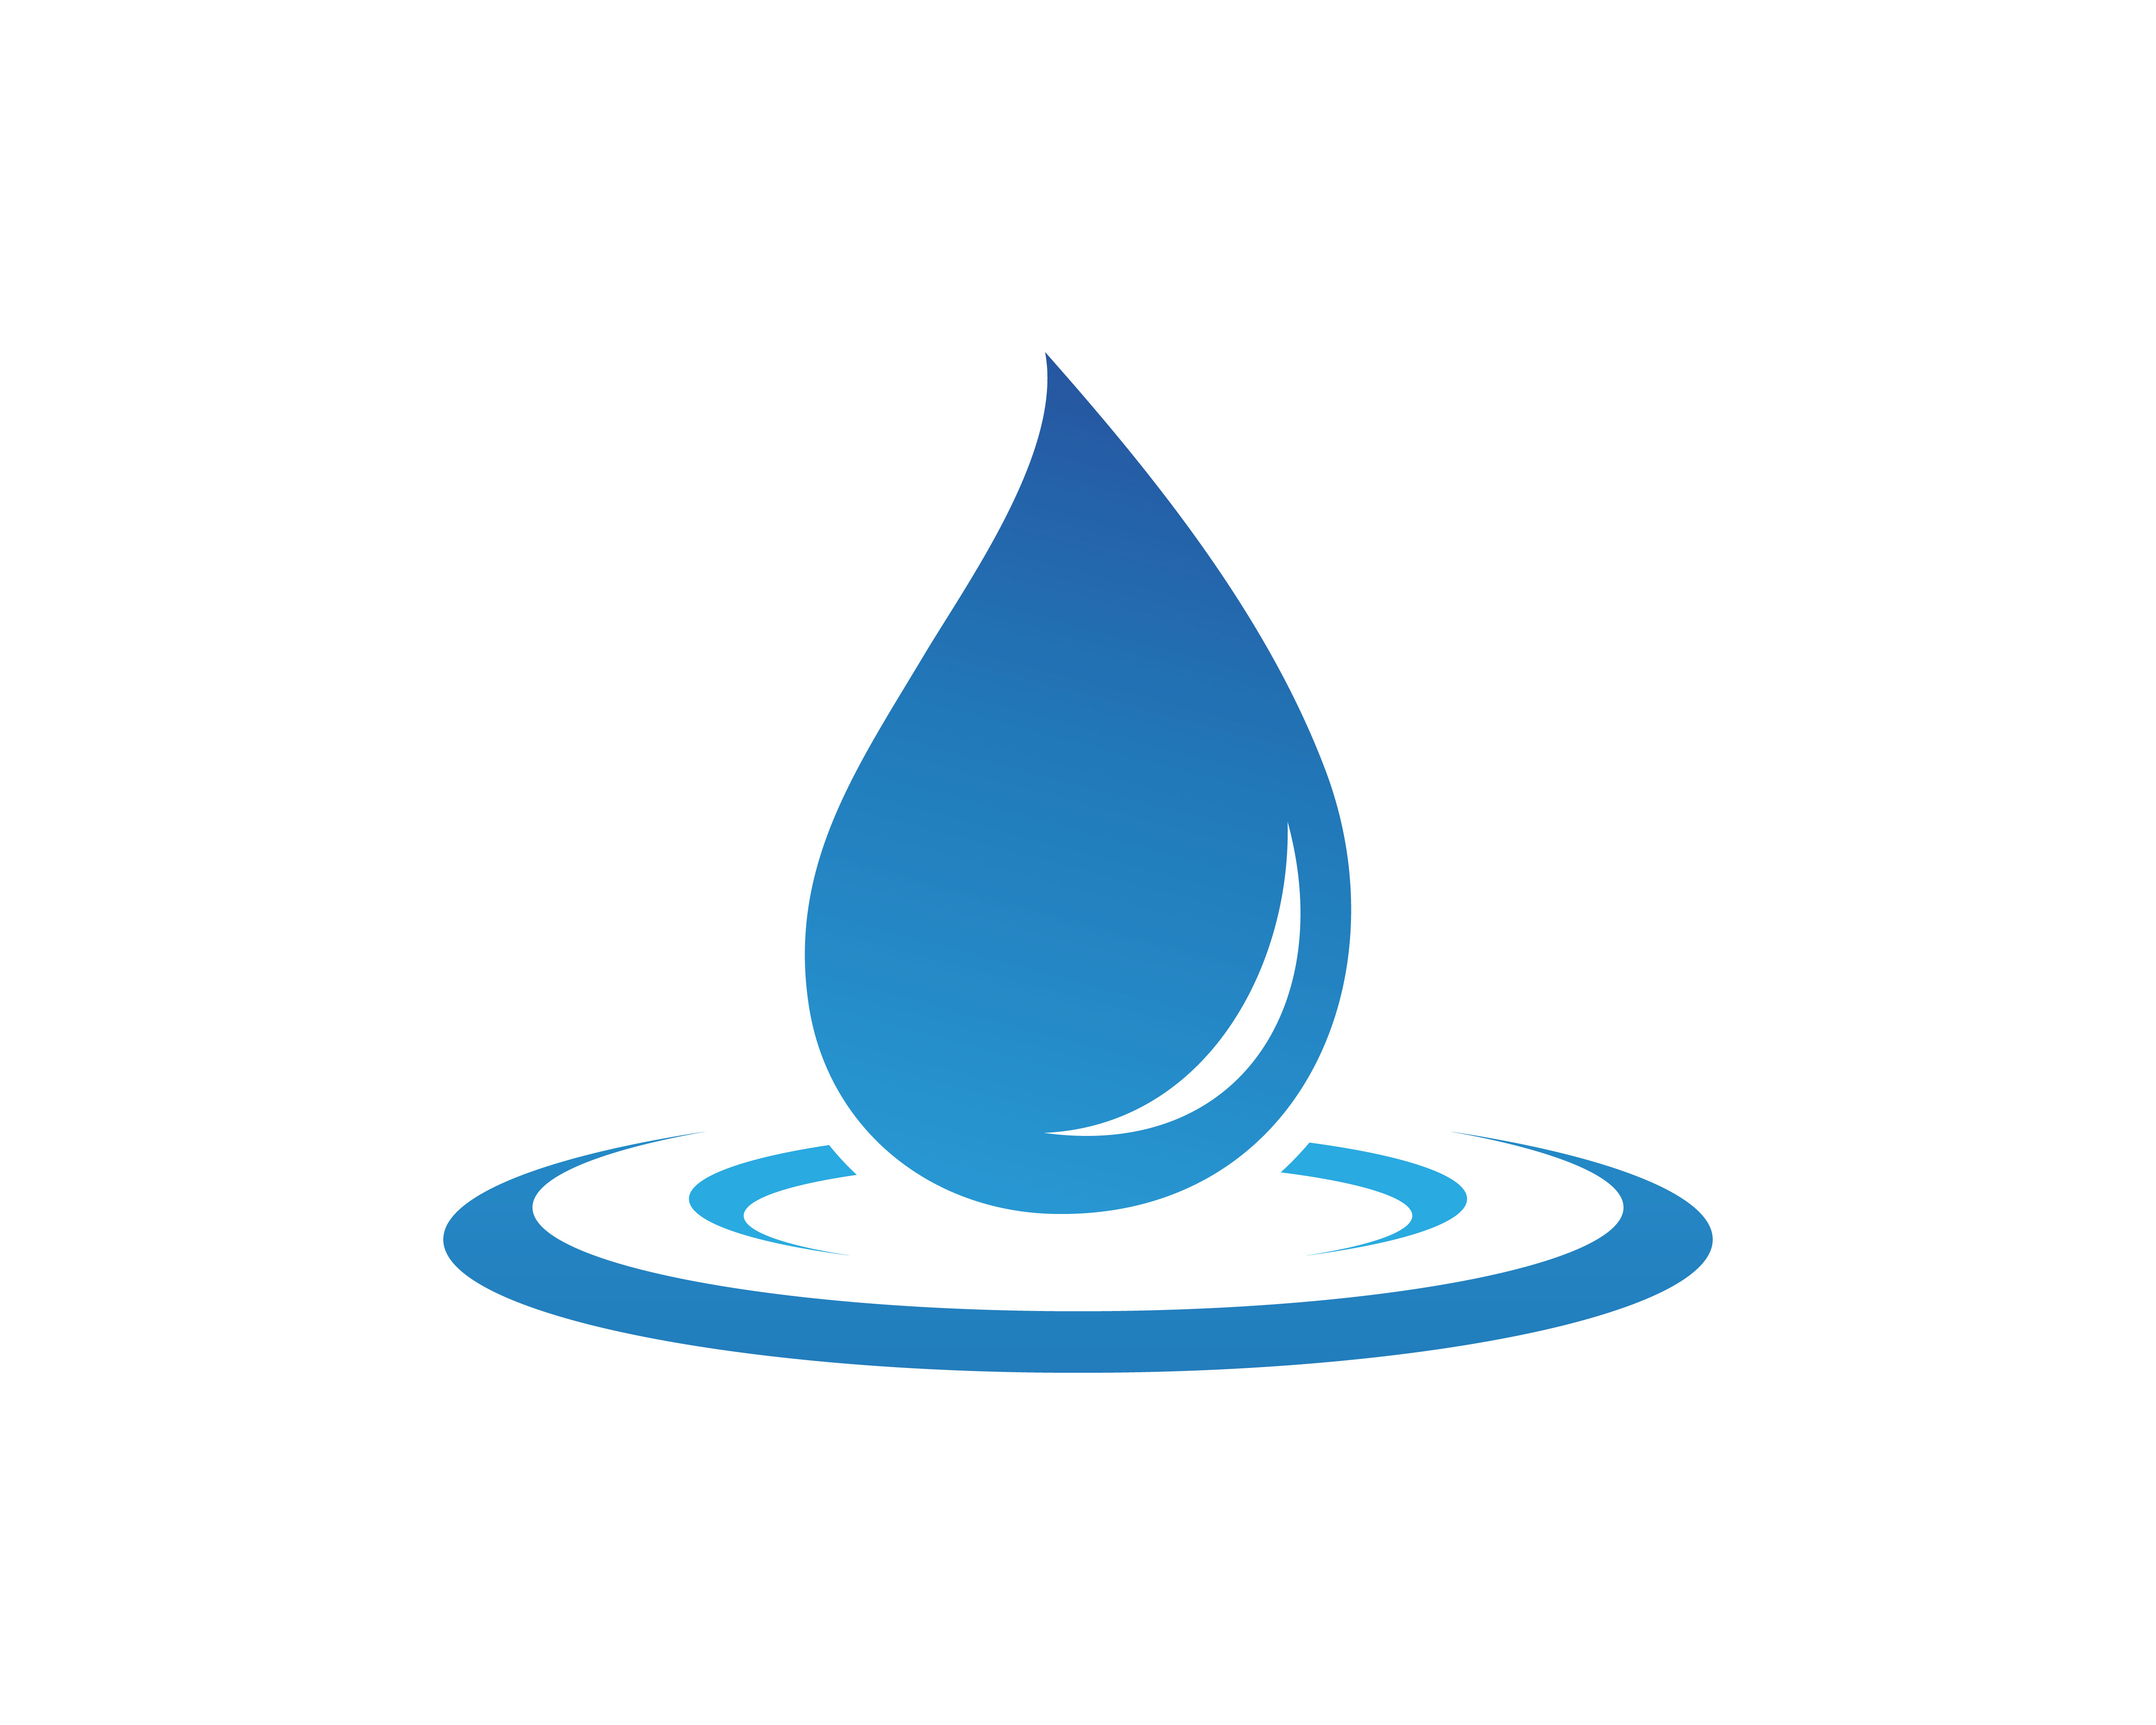 Download Water drop vector icon - Download Free Vectors, Clipart Graphics & Vector Art